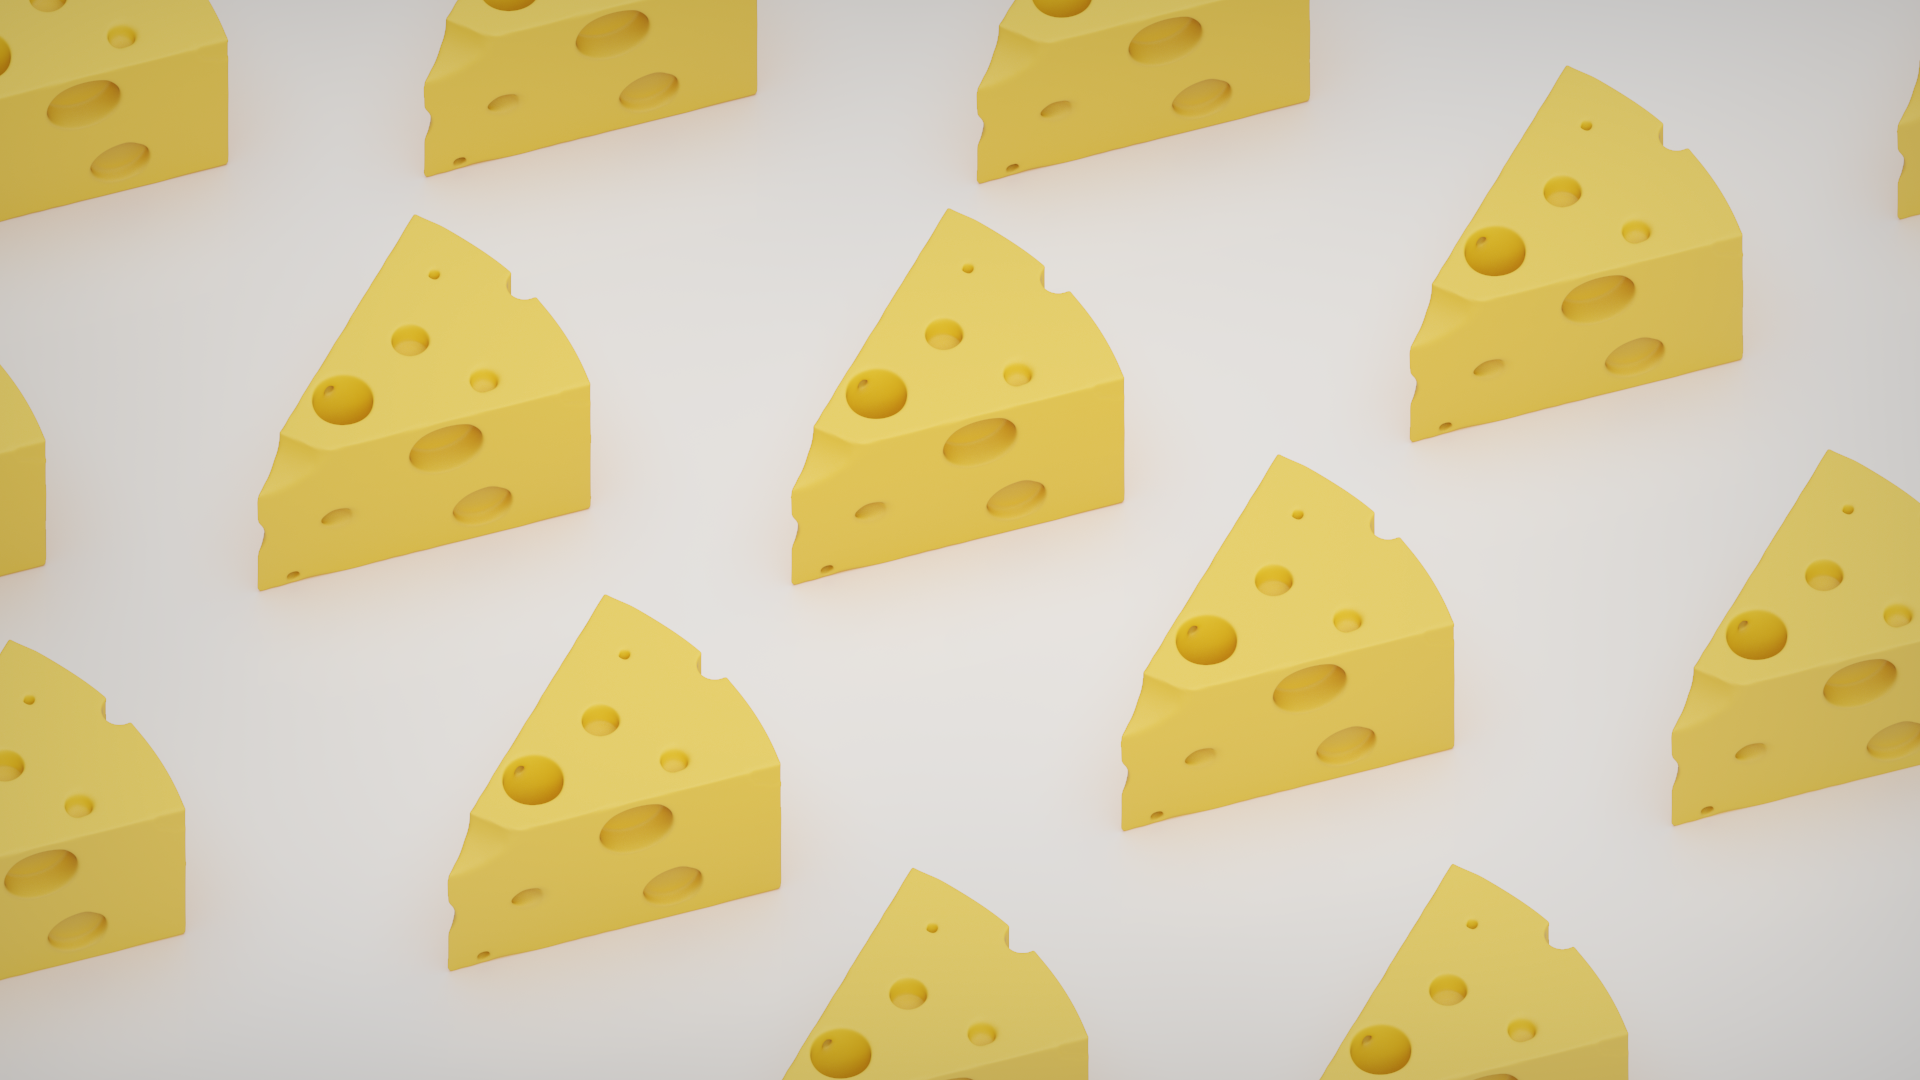 3D rendering of cheese